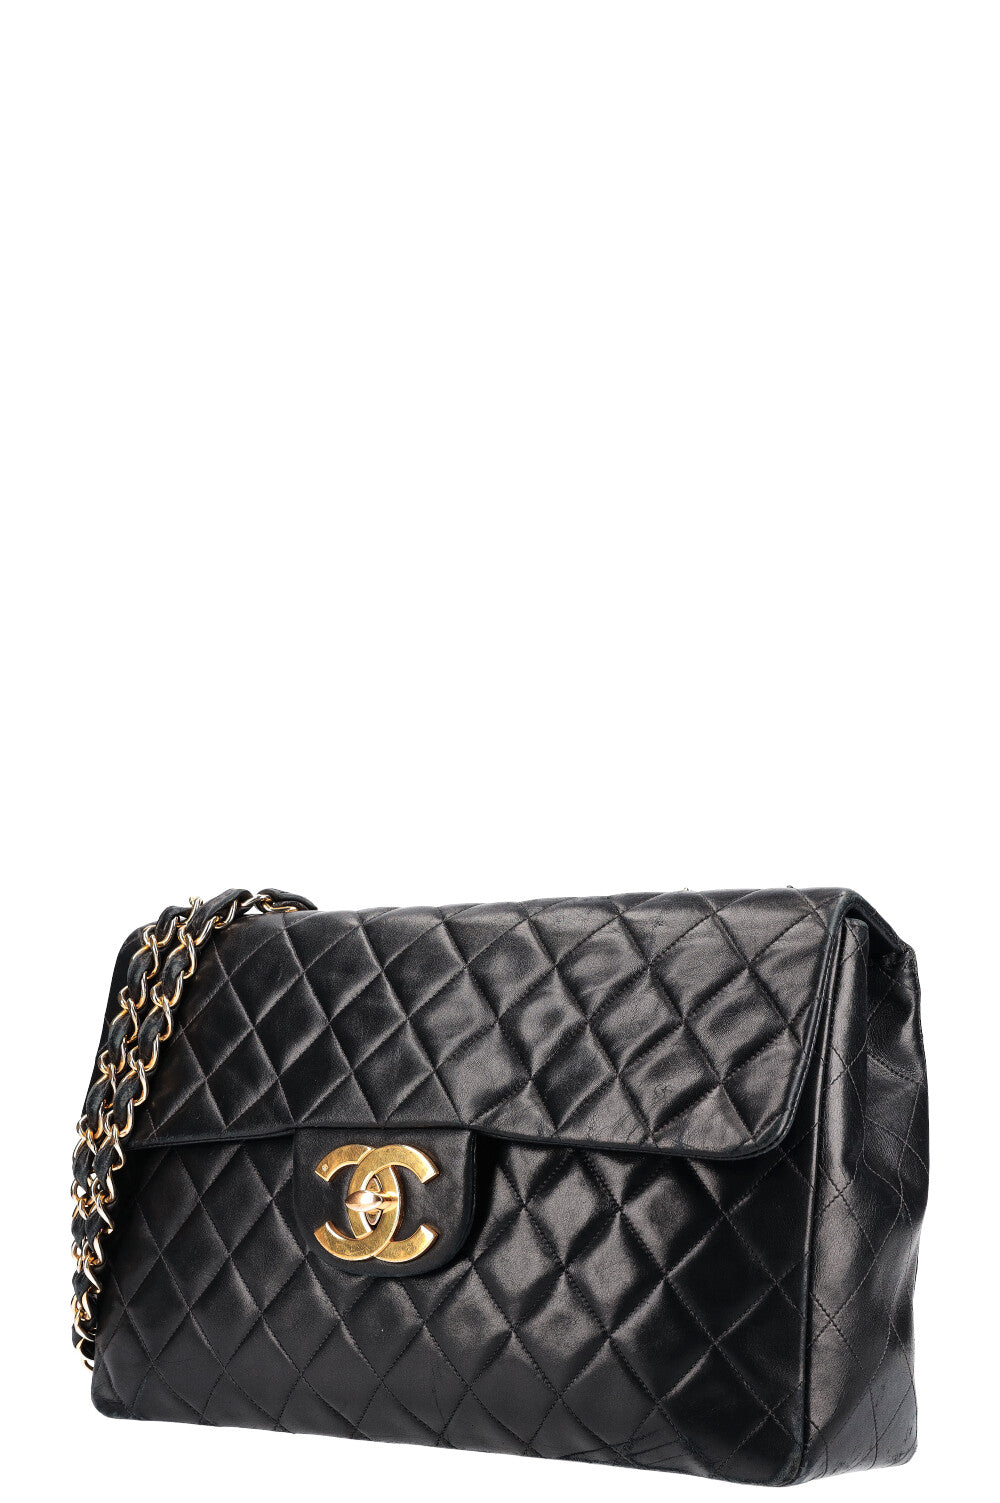 CHANEL Gift Box + Gift Bag SET Authentic Black & White NEW 9" x 5.5  "x 3"